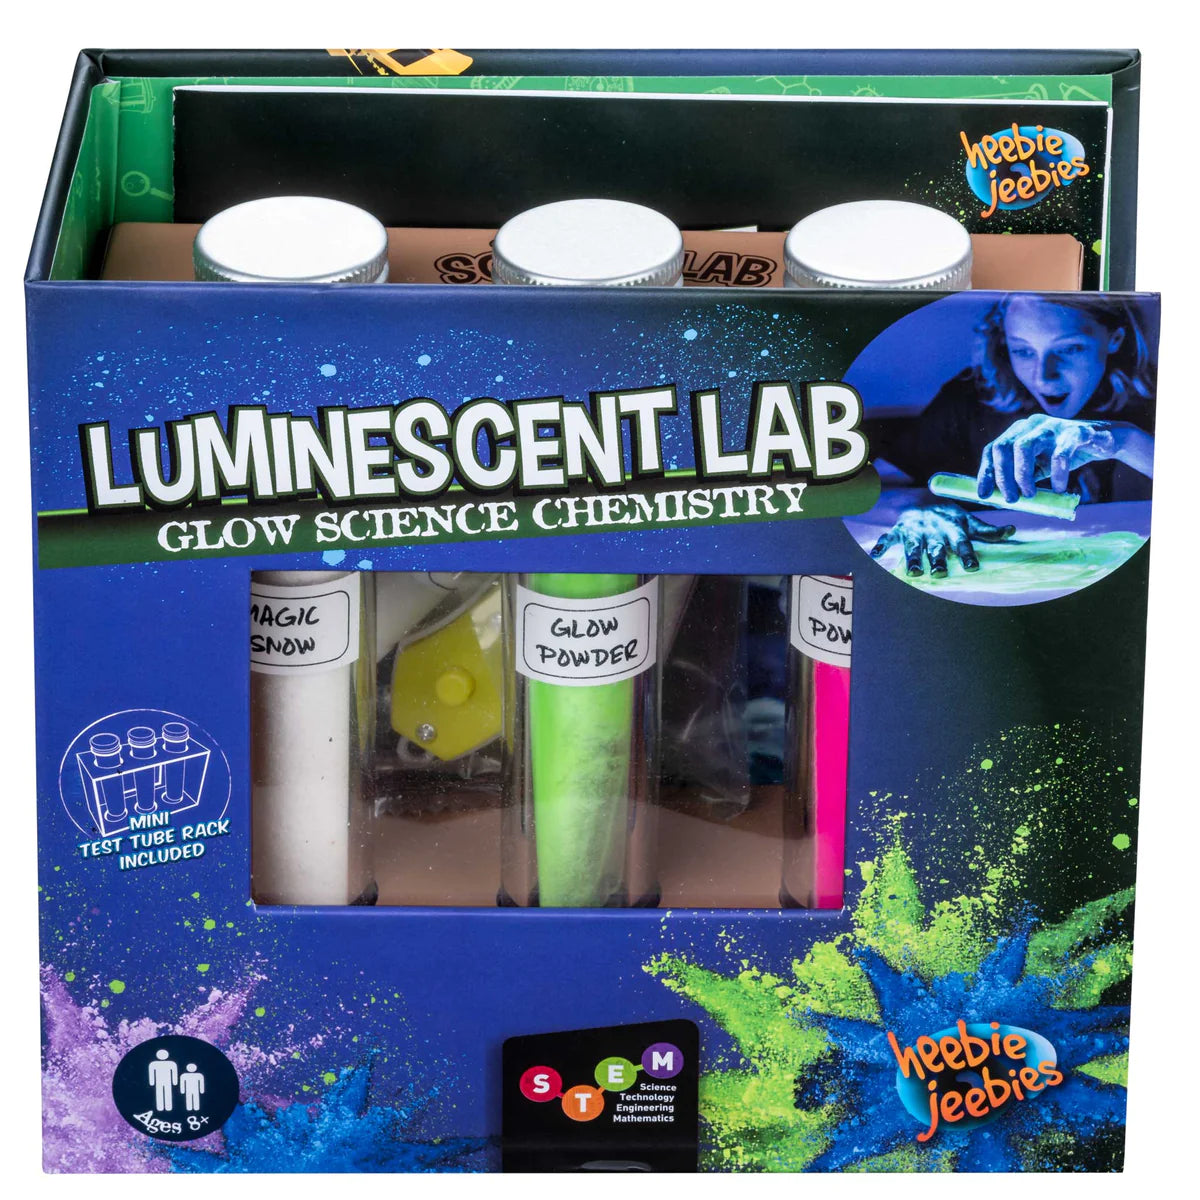 Heebie Jeebies Luminescent Lab Glow Science Chemistry